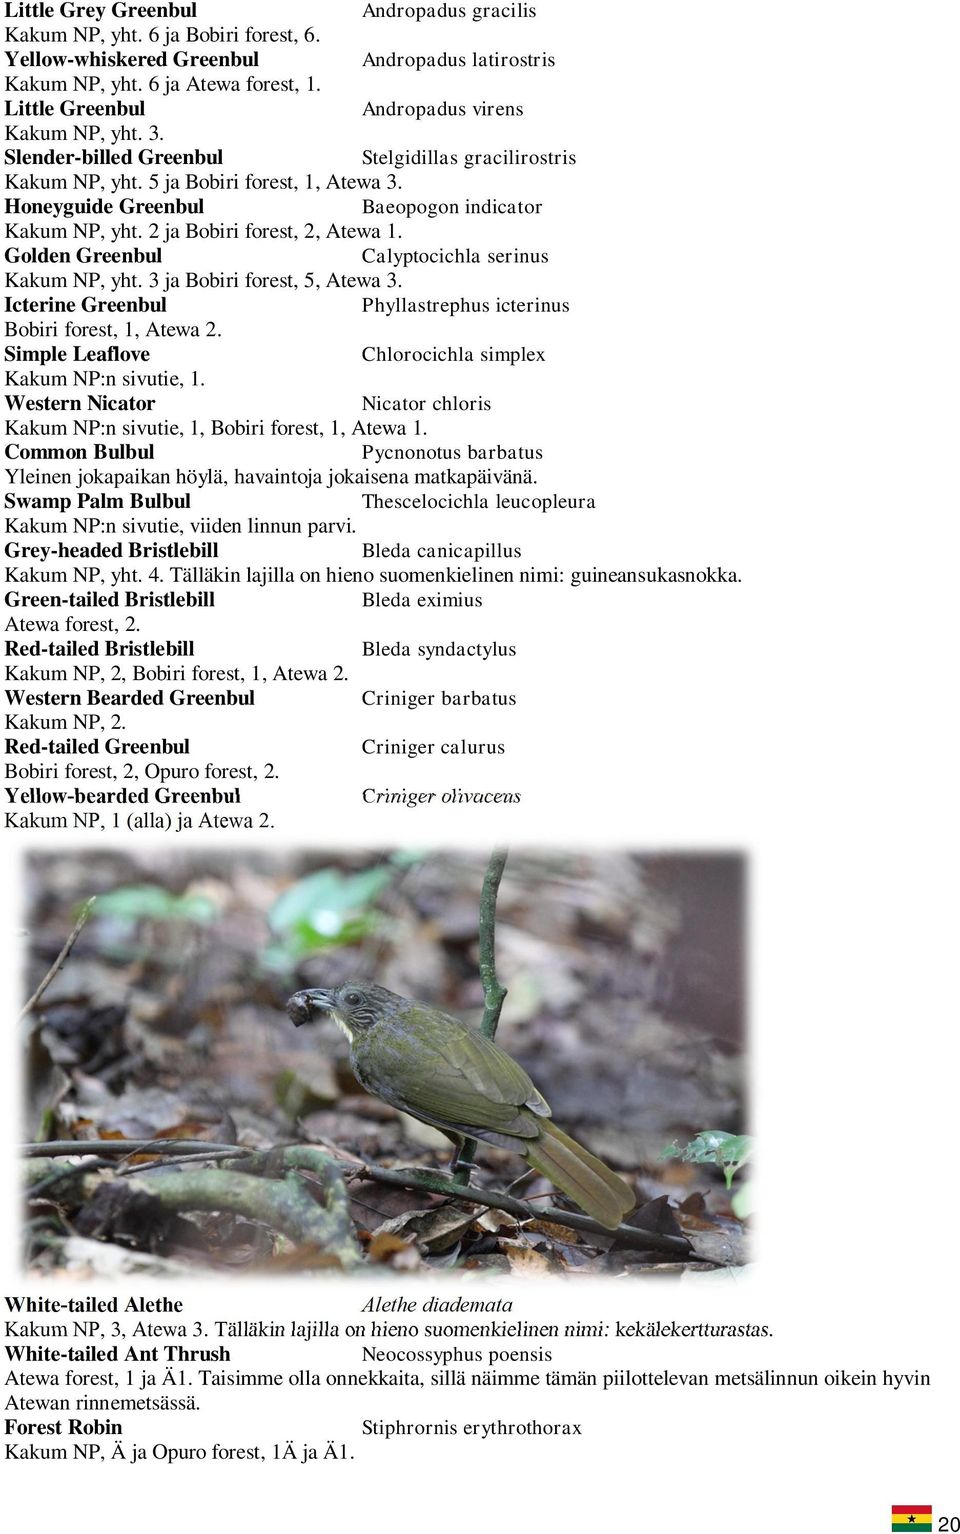 Honeyguide Greenbul Baeopogon indicator Kakum NP, yht. 2 ja Bobiri forest, 2, Atewa 1. Golden Greenbul Calyptocichla serinus Kakum NP, yht. 3 ja Bobiri forest, 5, Atewa 3.